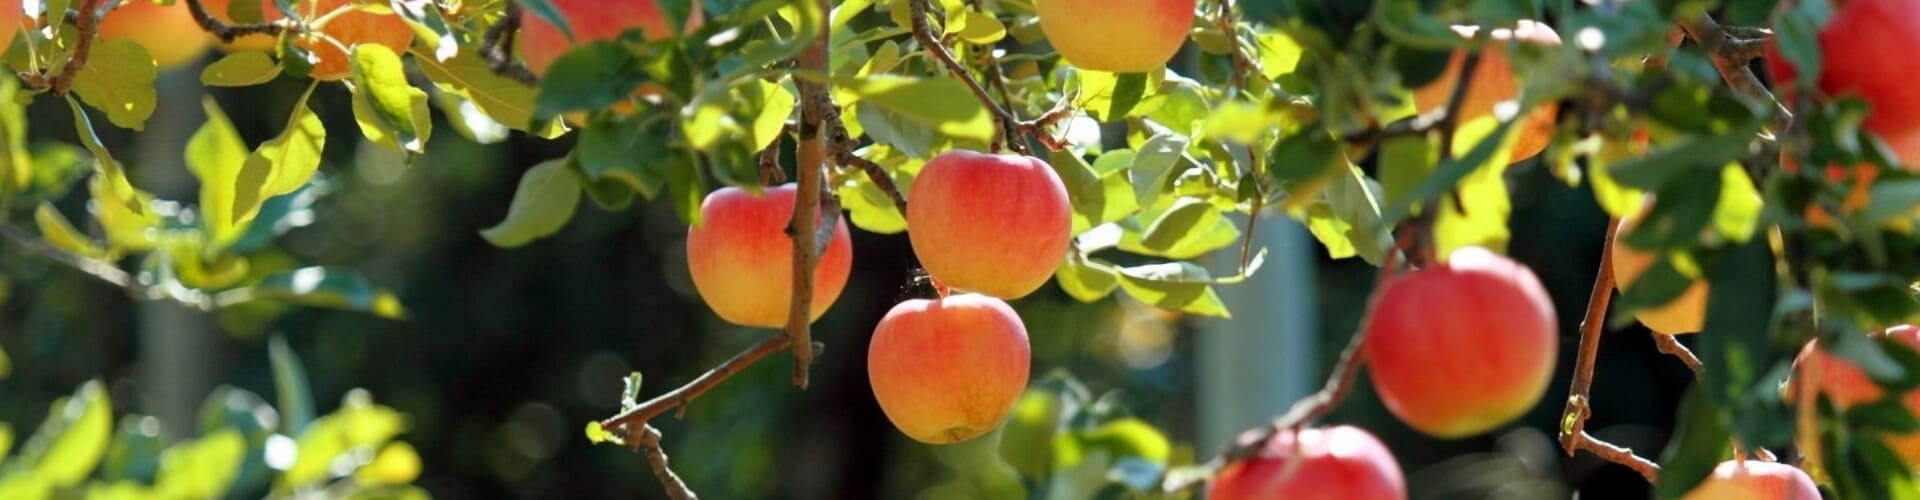 Buy mature fruit trees